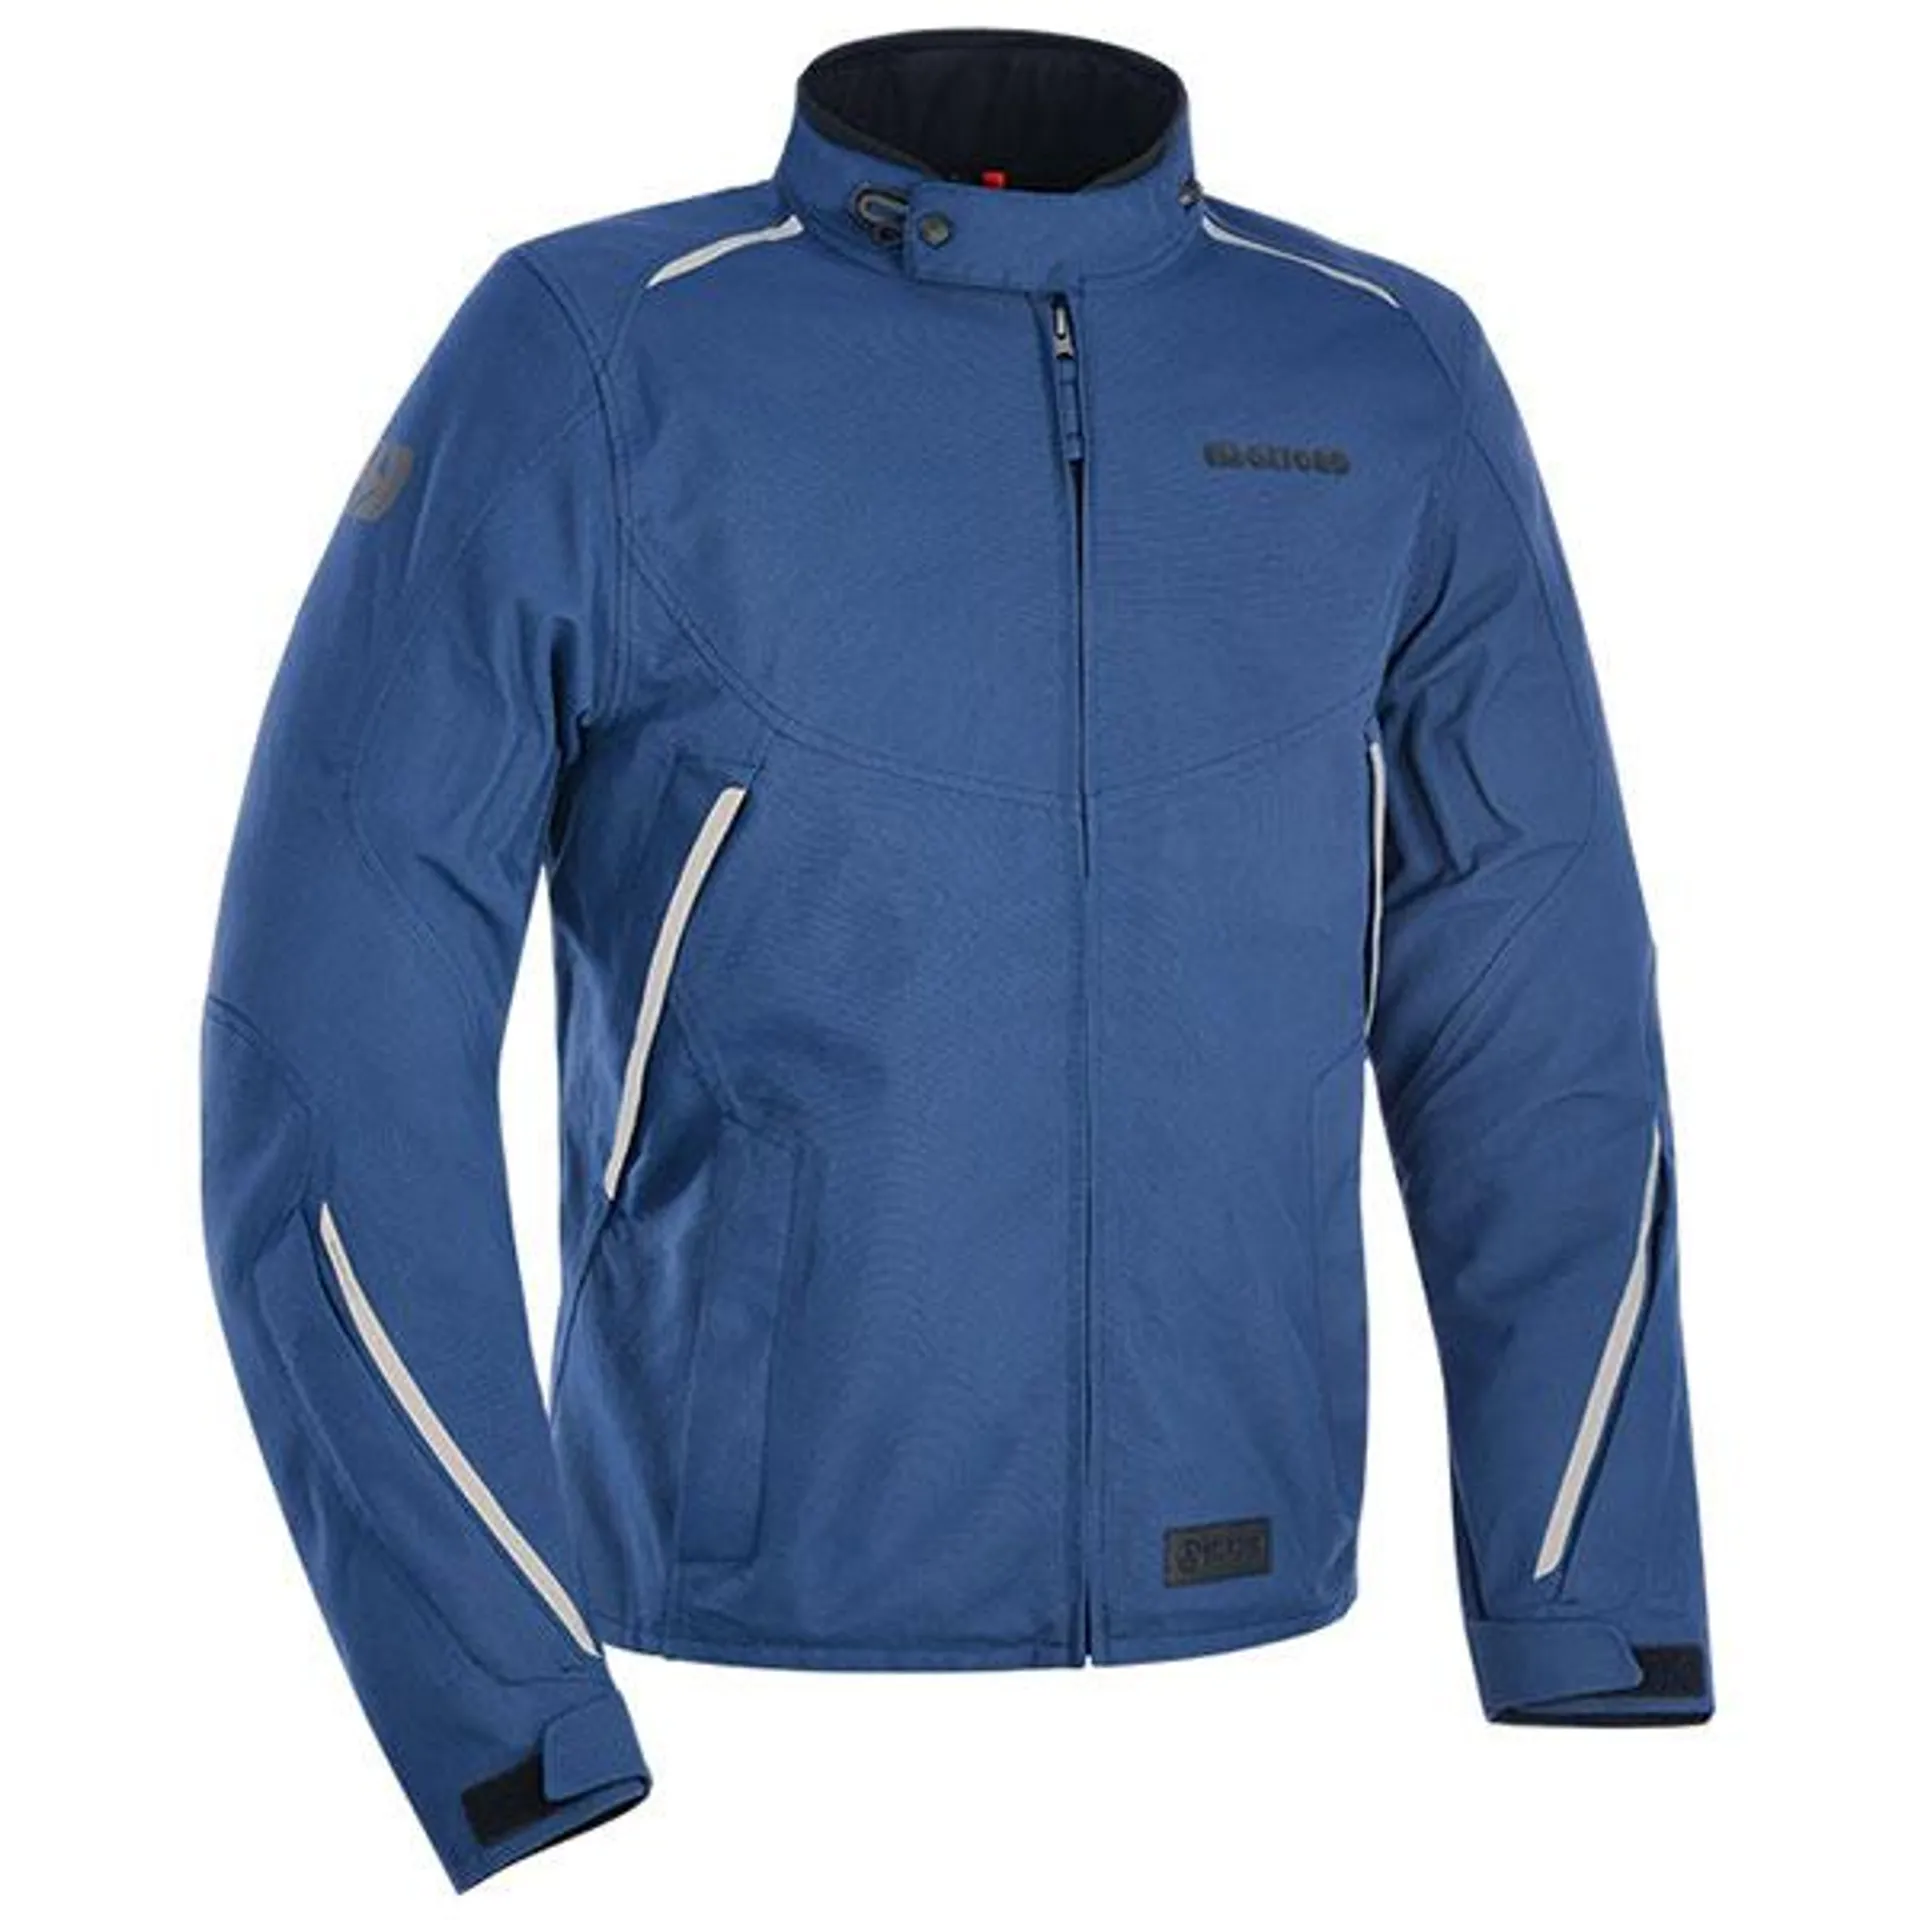 Oxford Hinterland Advanced Textile Jacket - Blue / Black